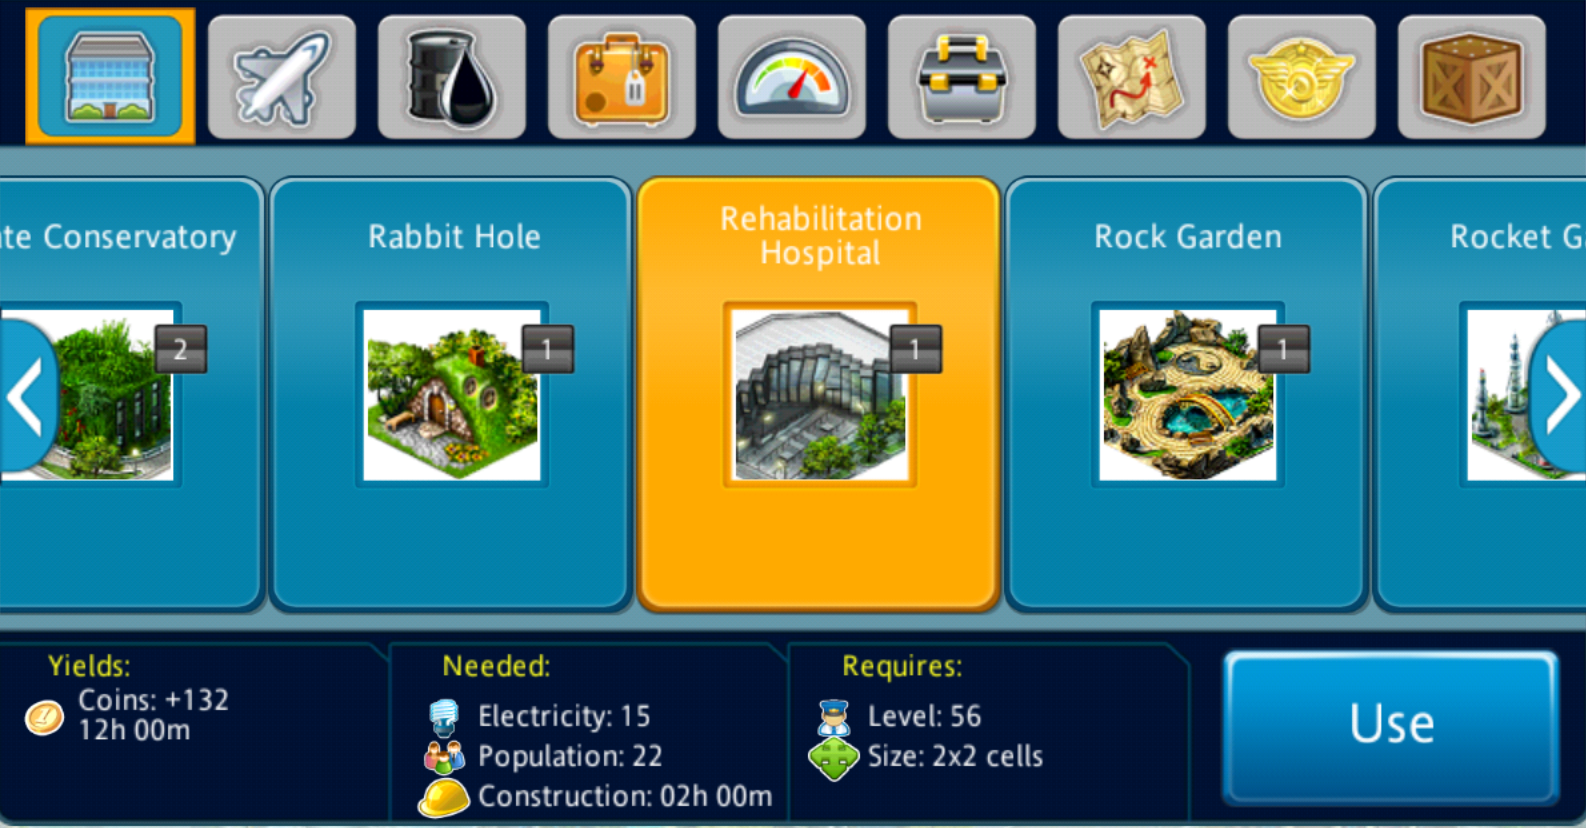 RehabilitationHospital.png